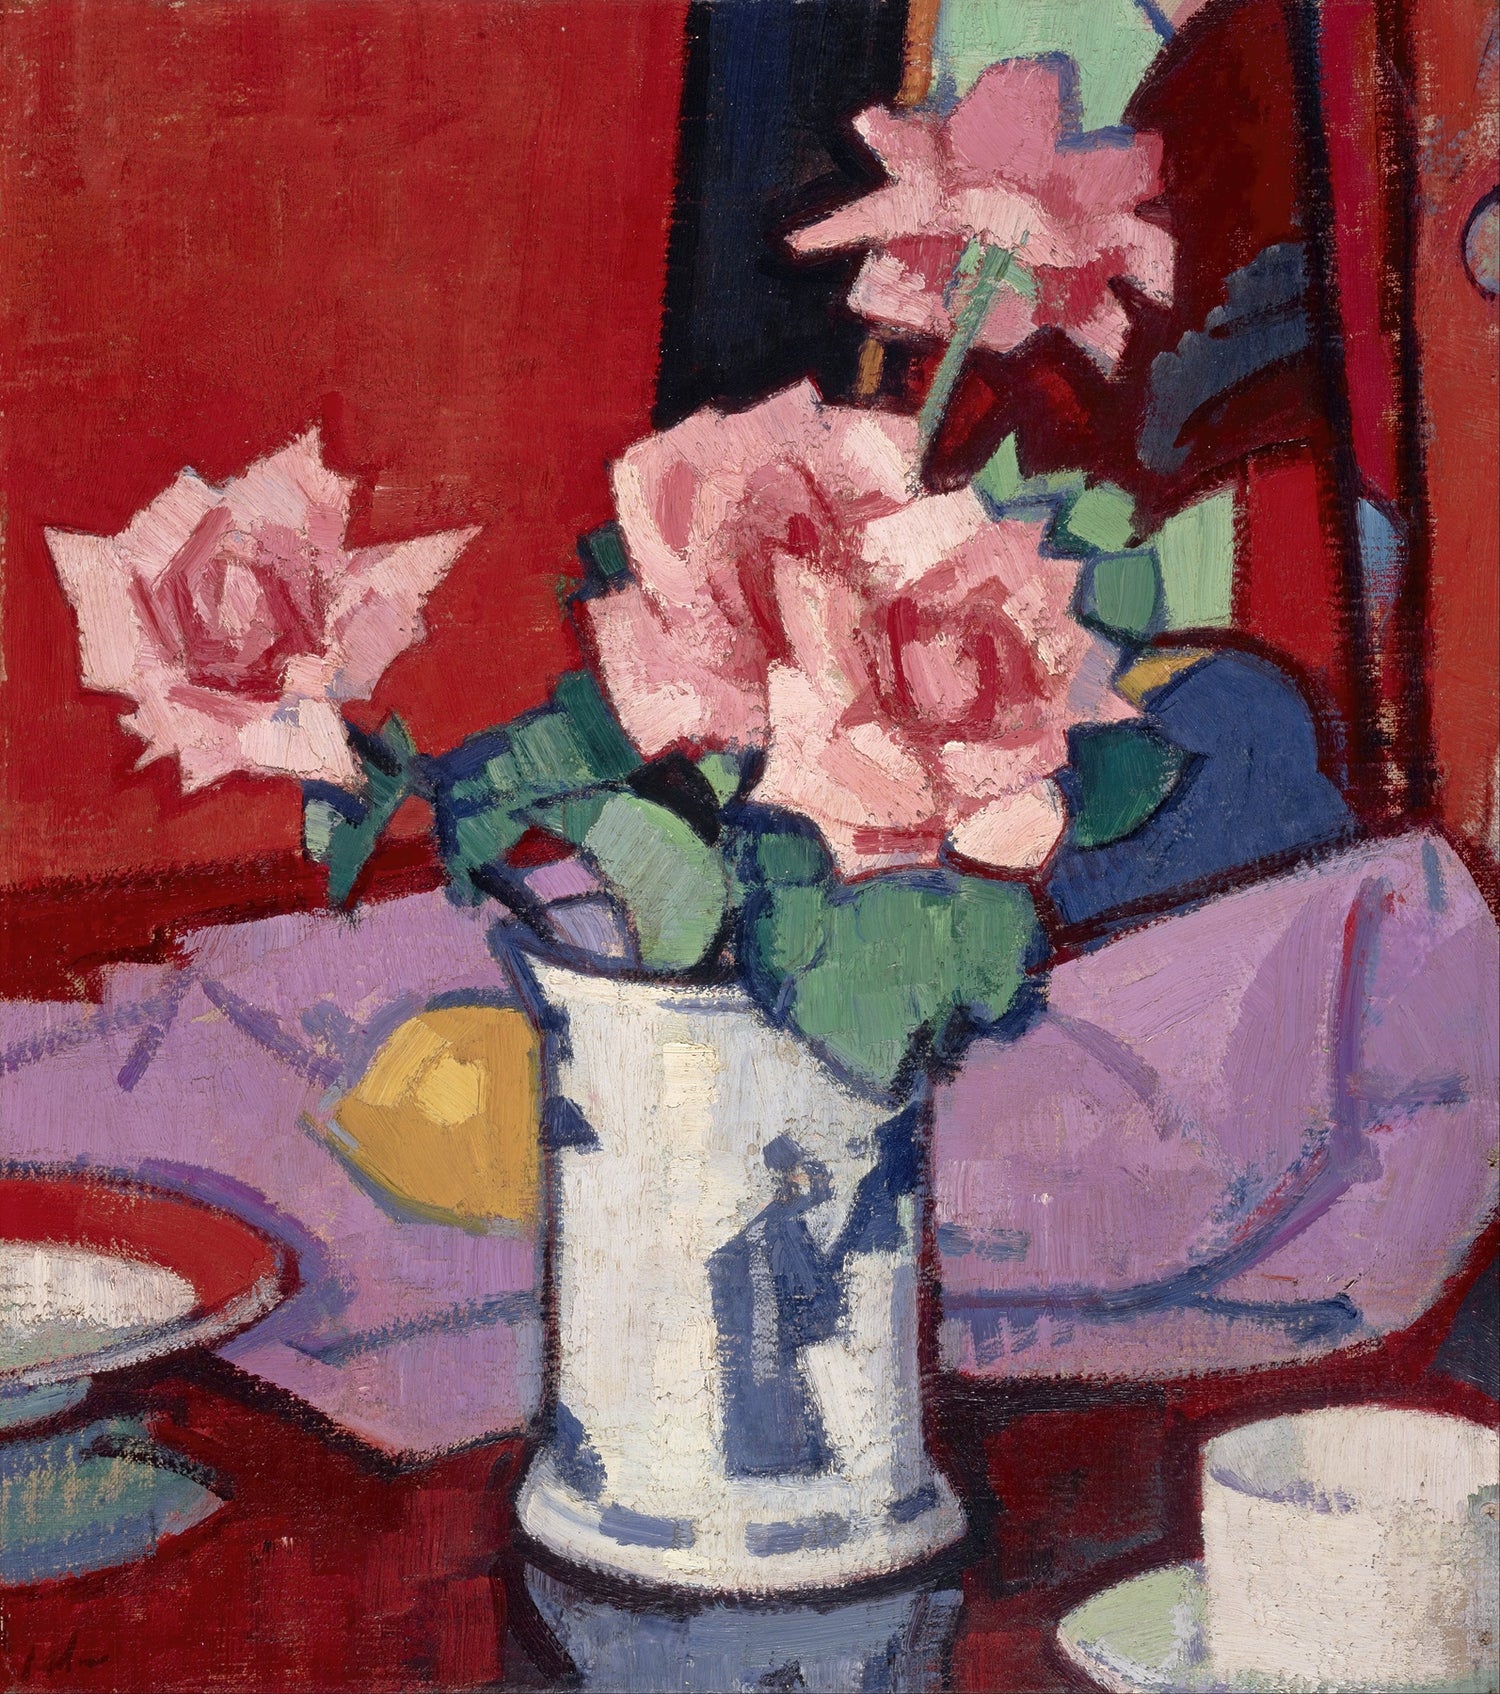 Pink Roses in a Chinese vase (1920s) | Samuel John Peploe prints Posters, Prints, & Visual Artwork The Trumpet Shop Vintage Prints   